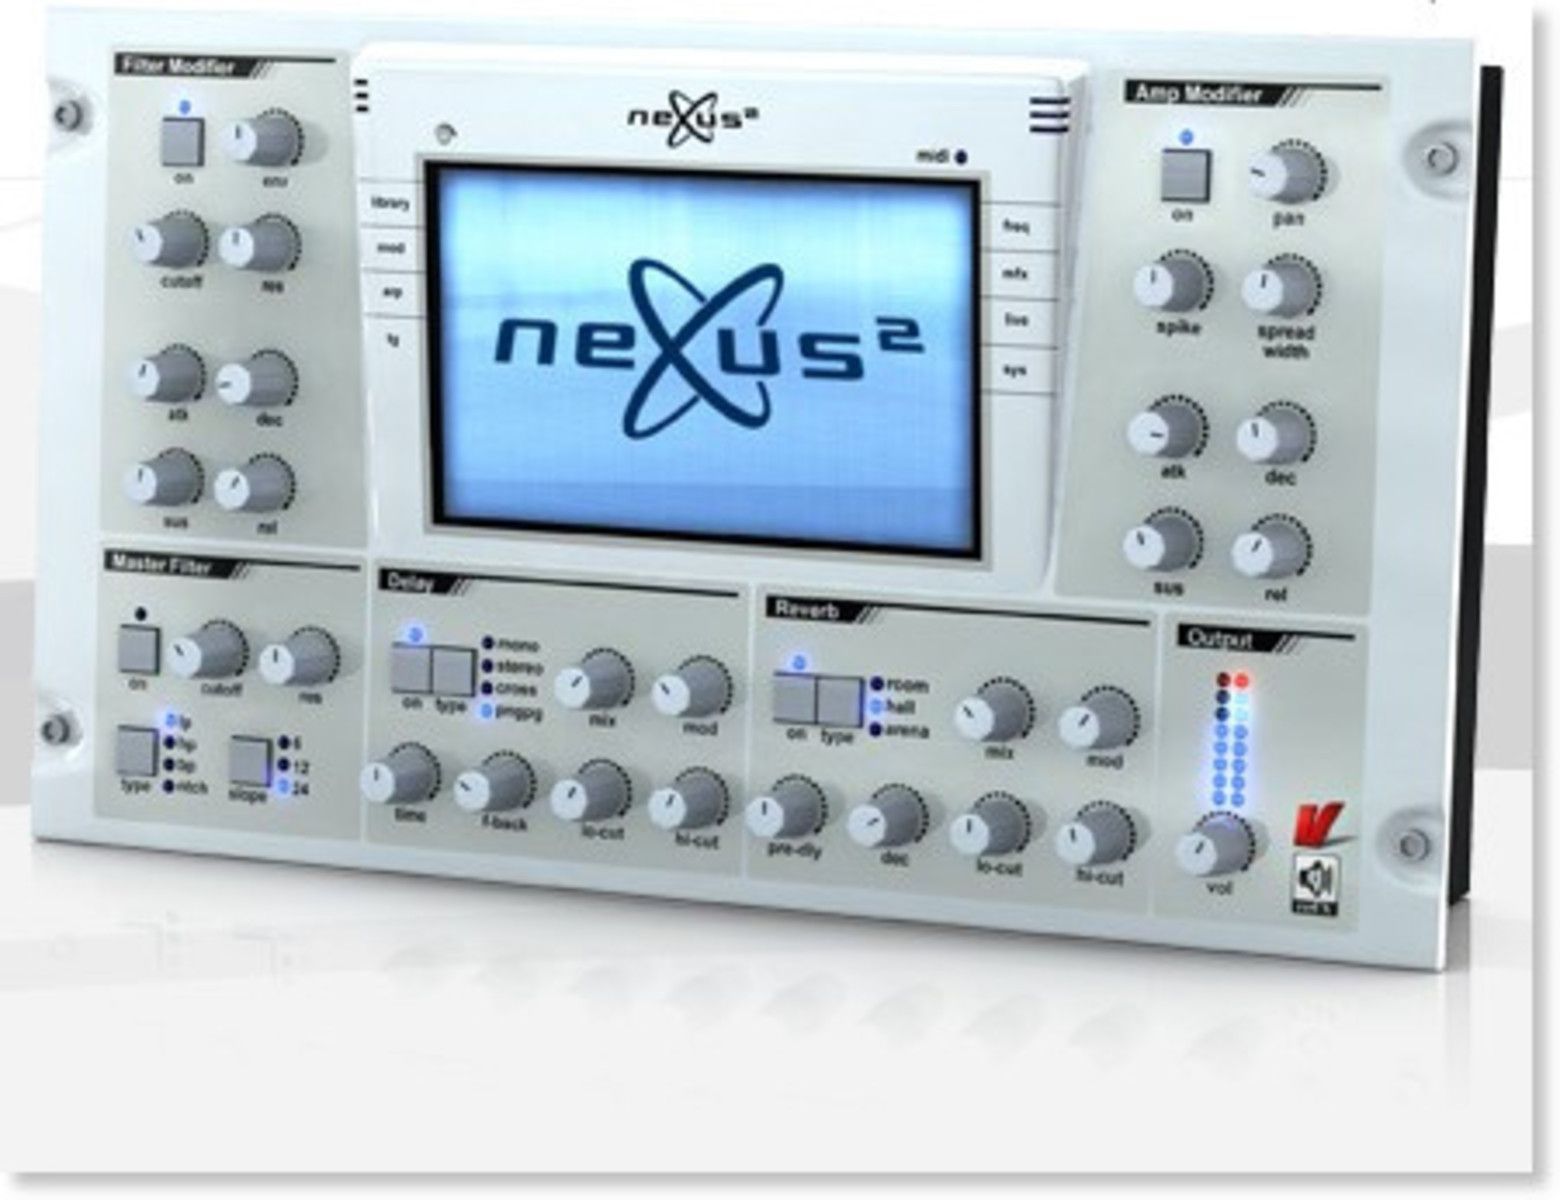 nexus fl studio 10